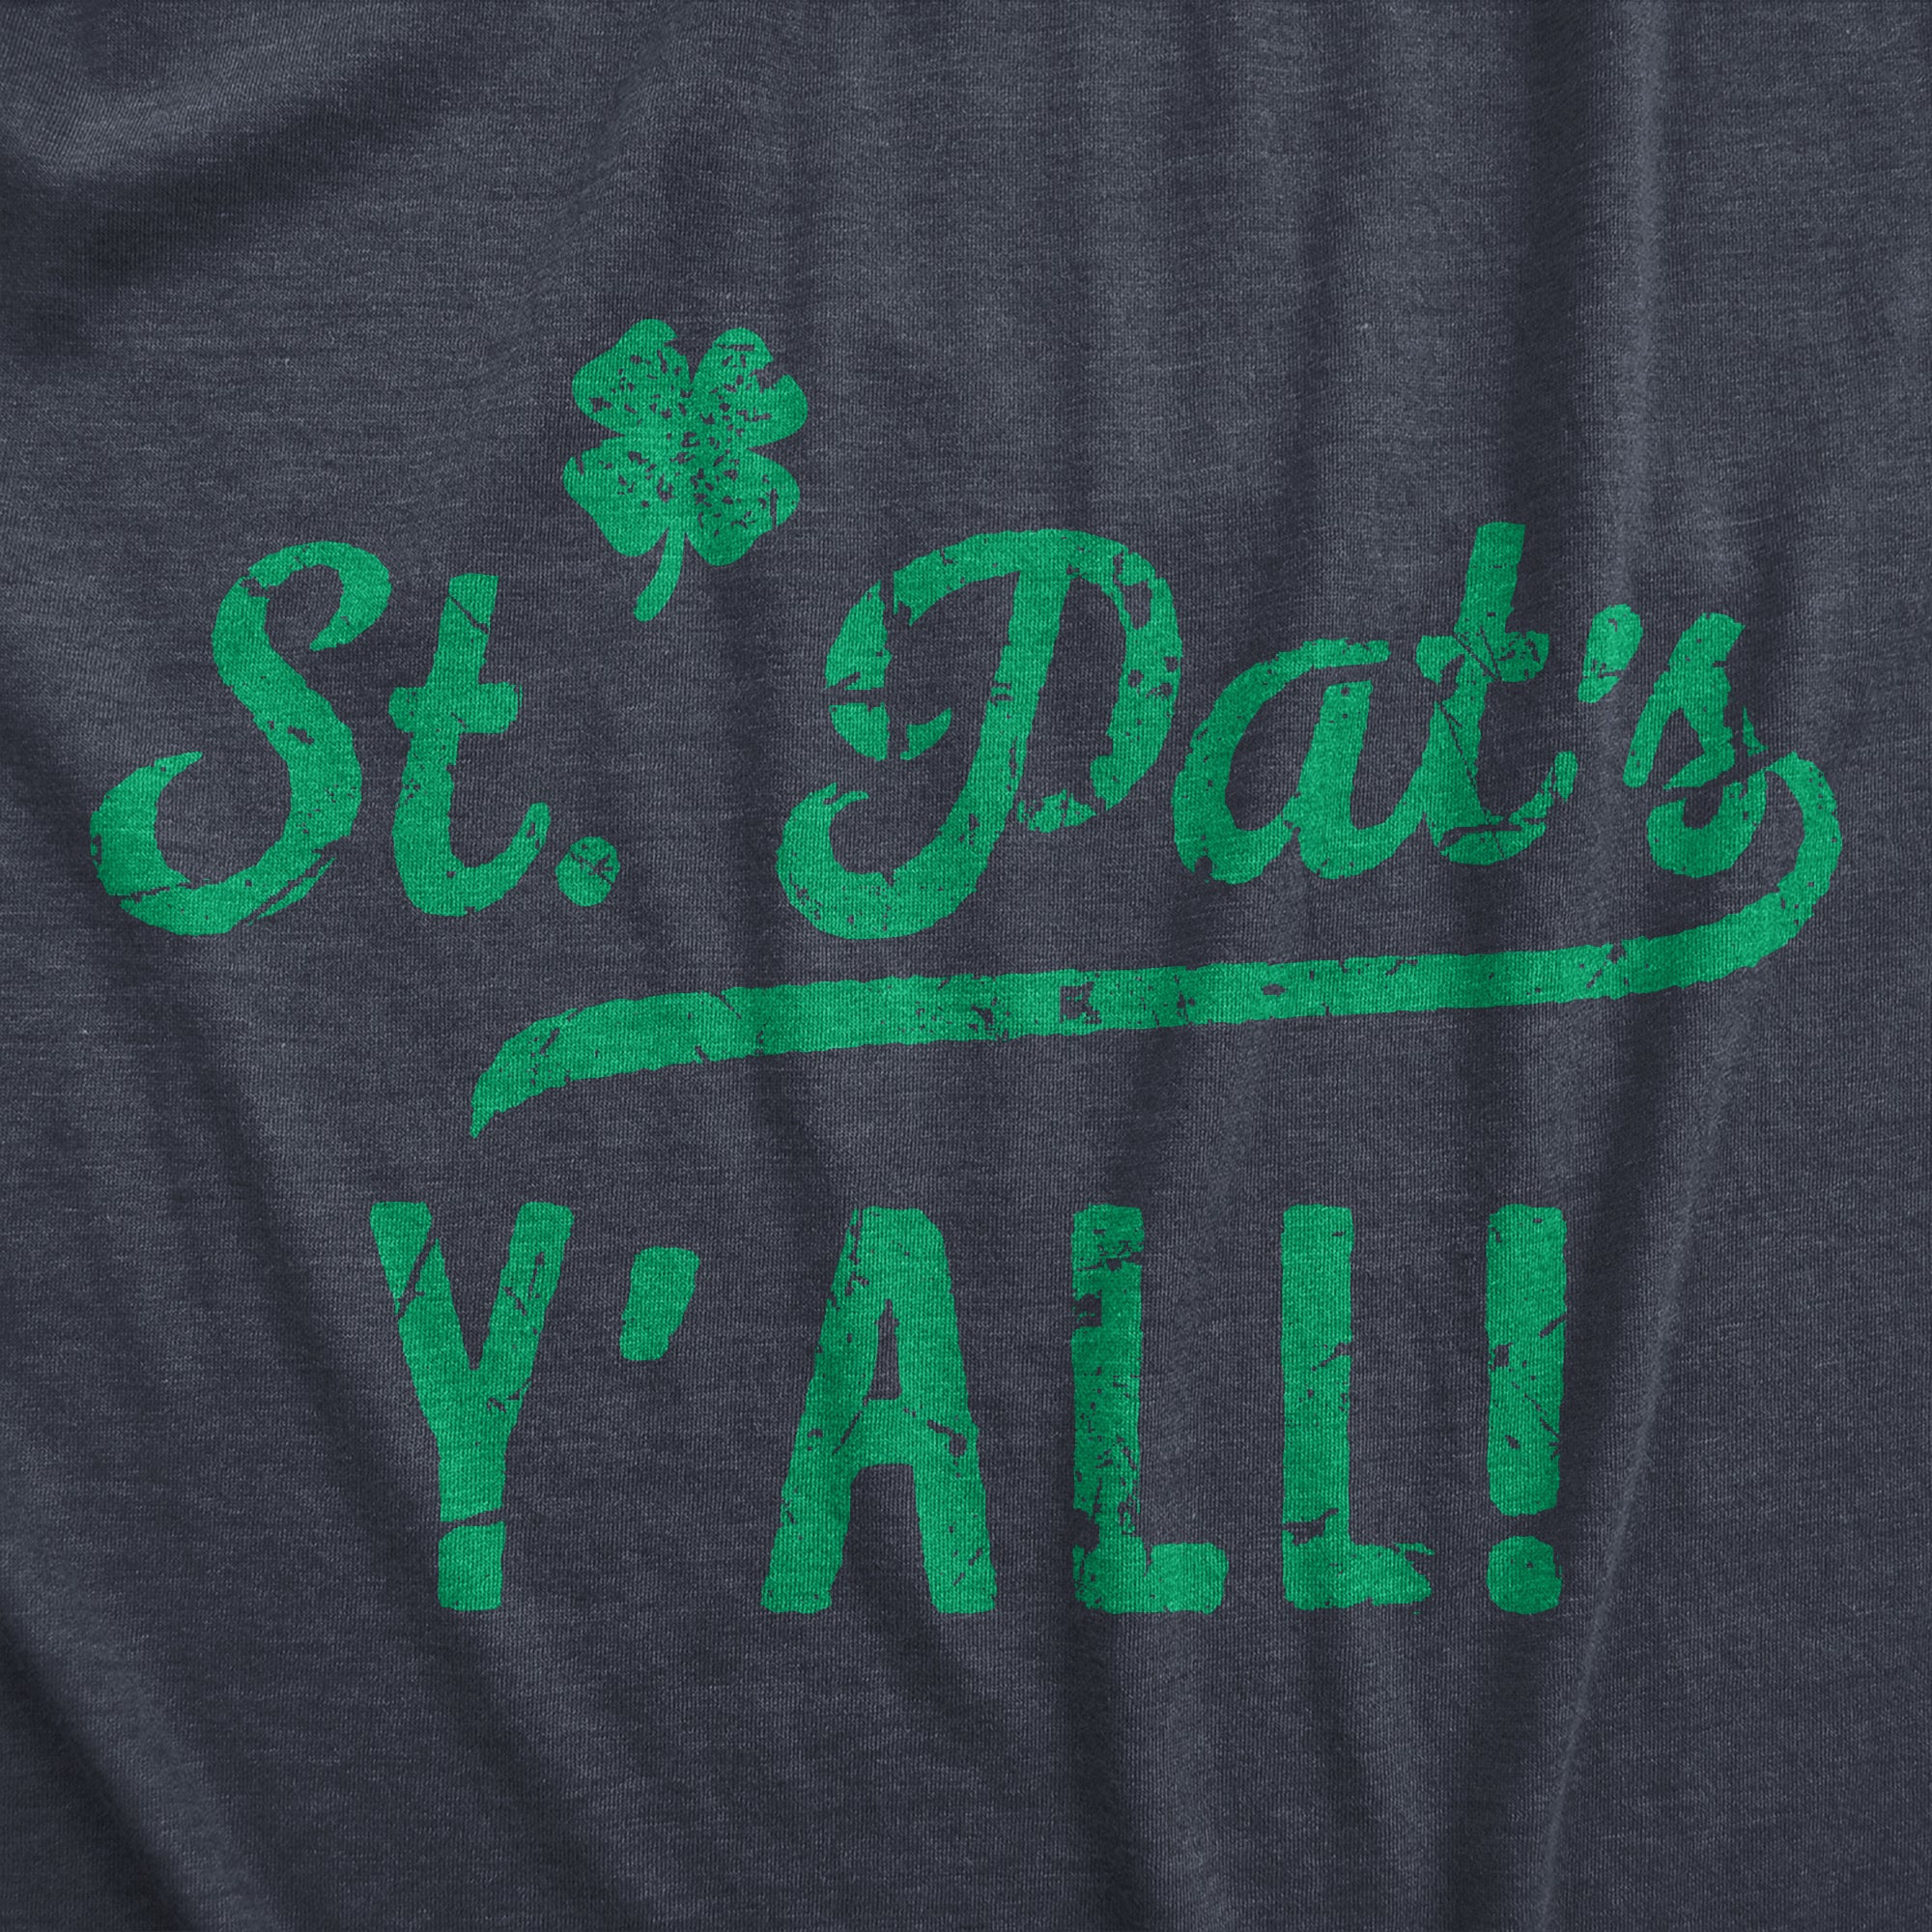 Funny Heather Navy - ST.PATS St Pats Yall Womens T Shirt Nerdy Saint Patrick's Day Tee